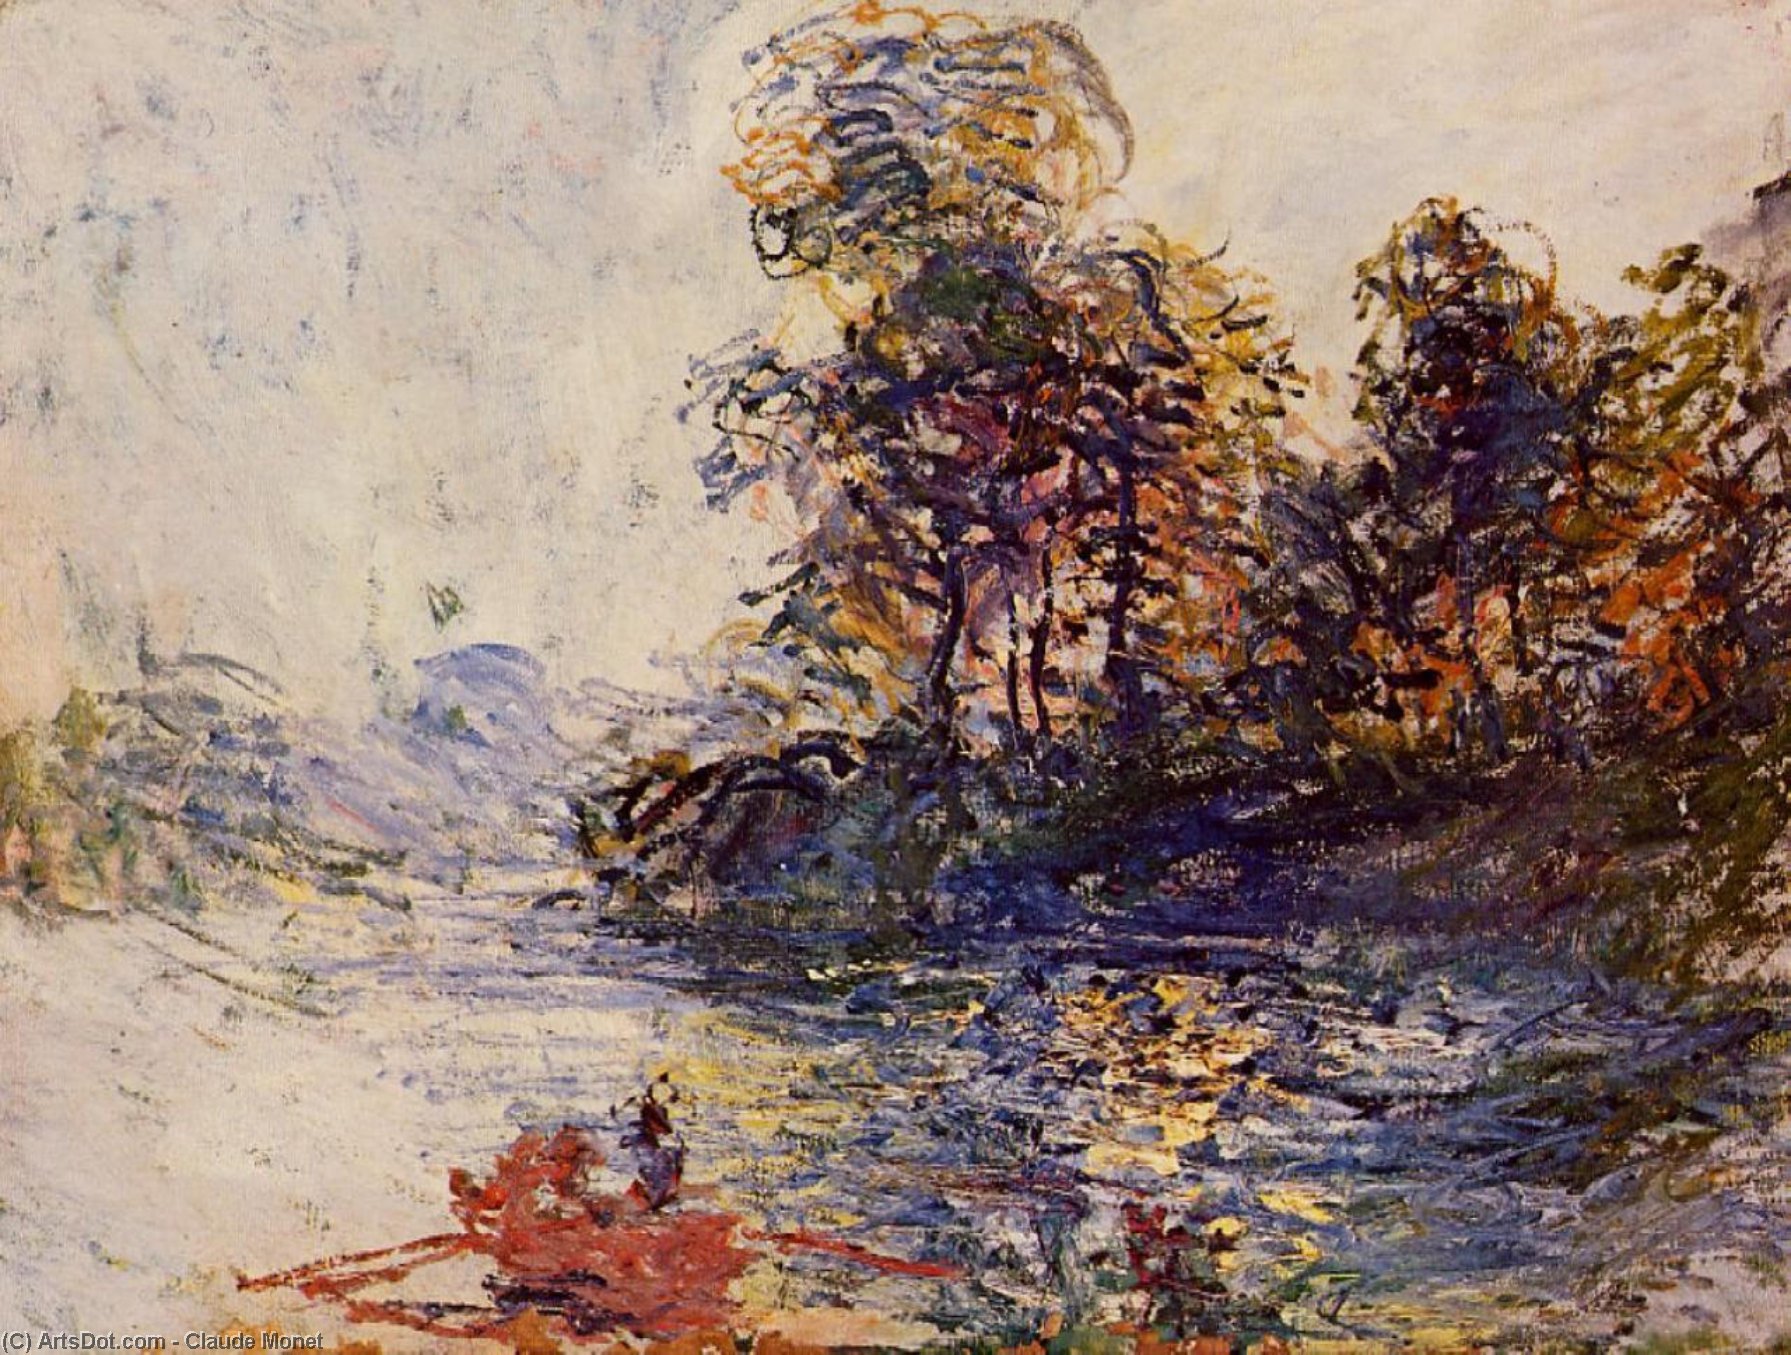 Acheter Reproductions D'art De Musée La rivière, 1881 de Claude Monet (1840-1926, France) | ArtsDot.com